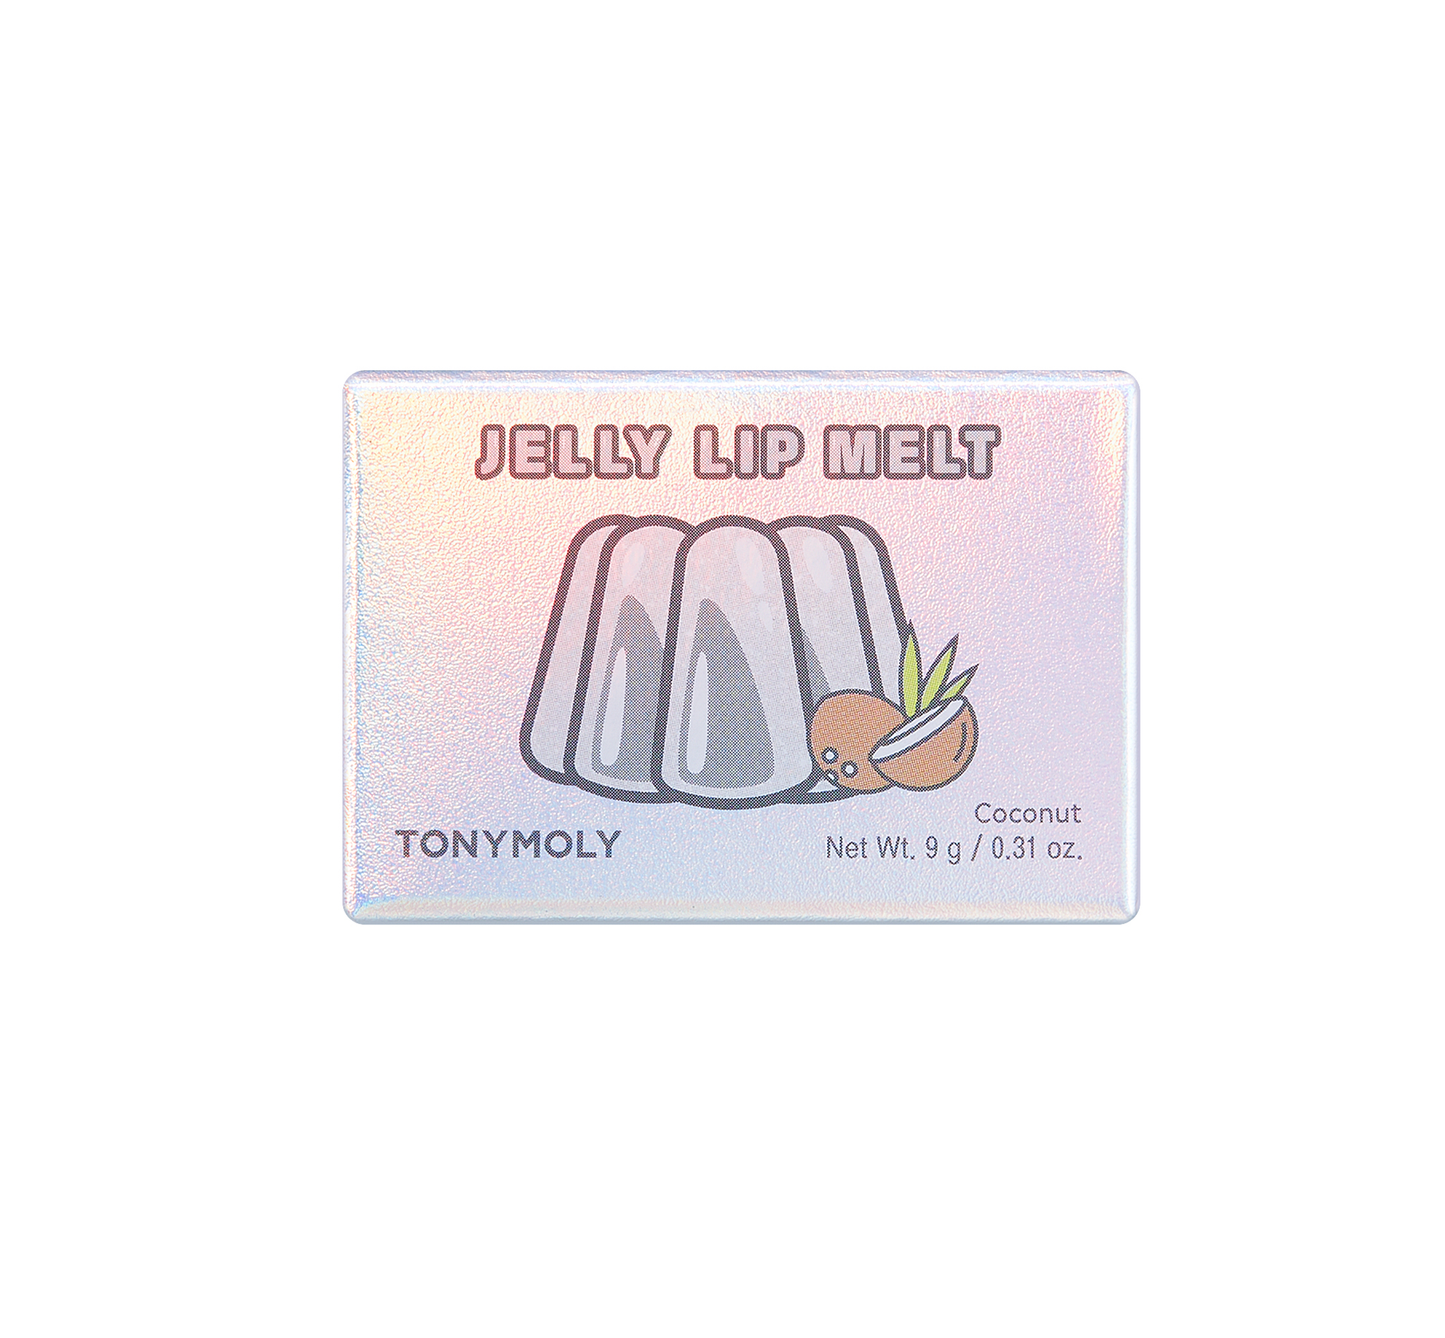 Tony Moly | Jelly Lip Melt - Coconut - Limited Edition Pride sparkle